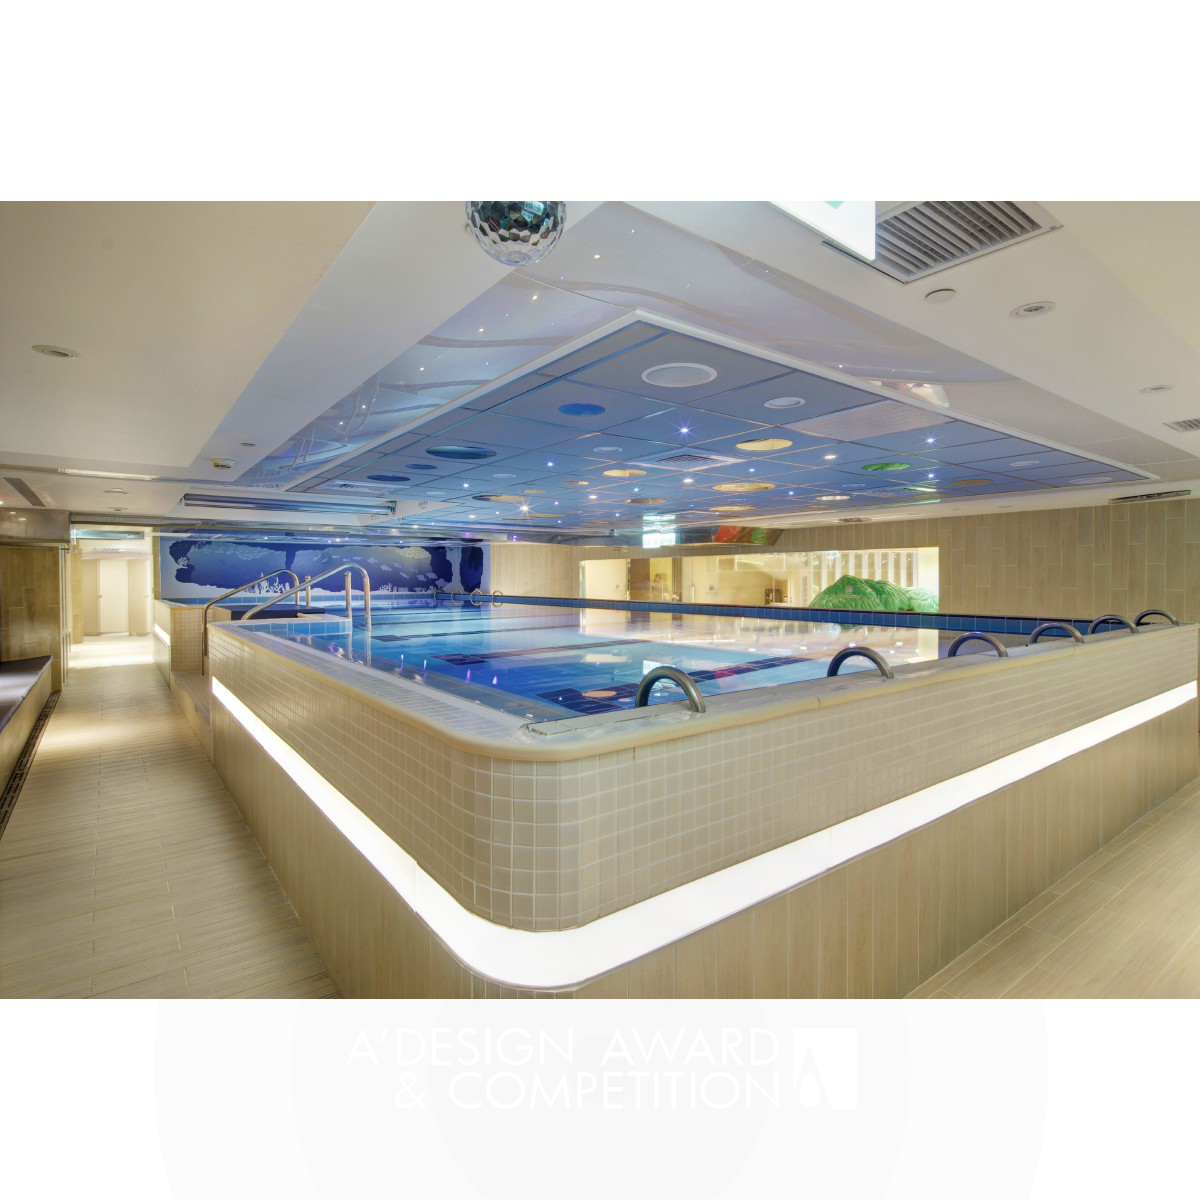 Han Lee Swimming Center